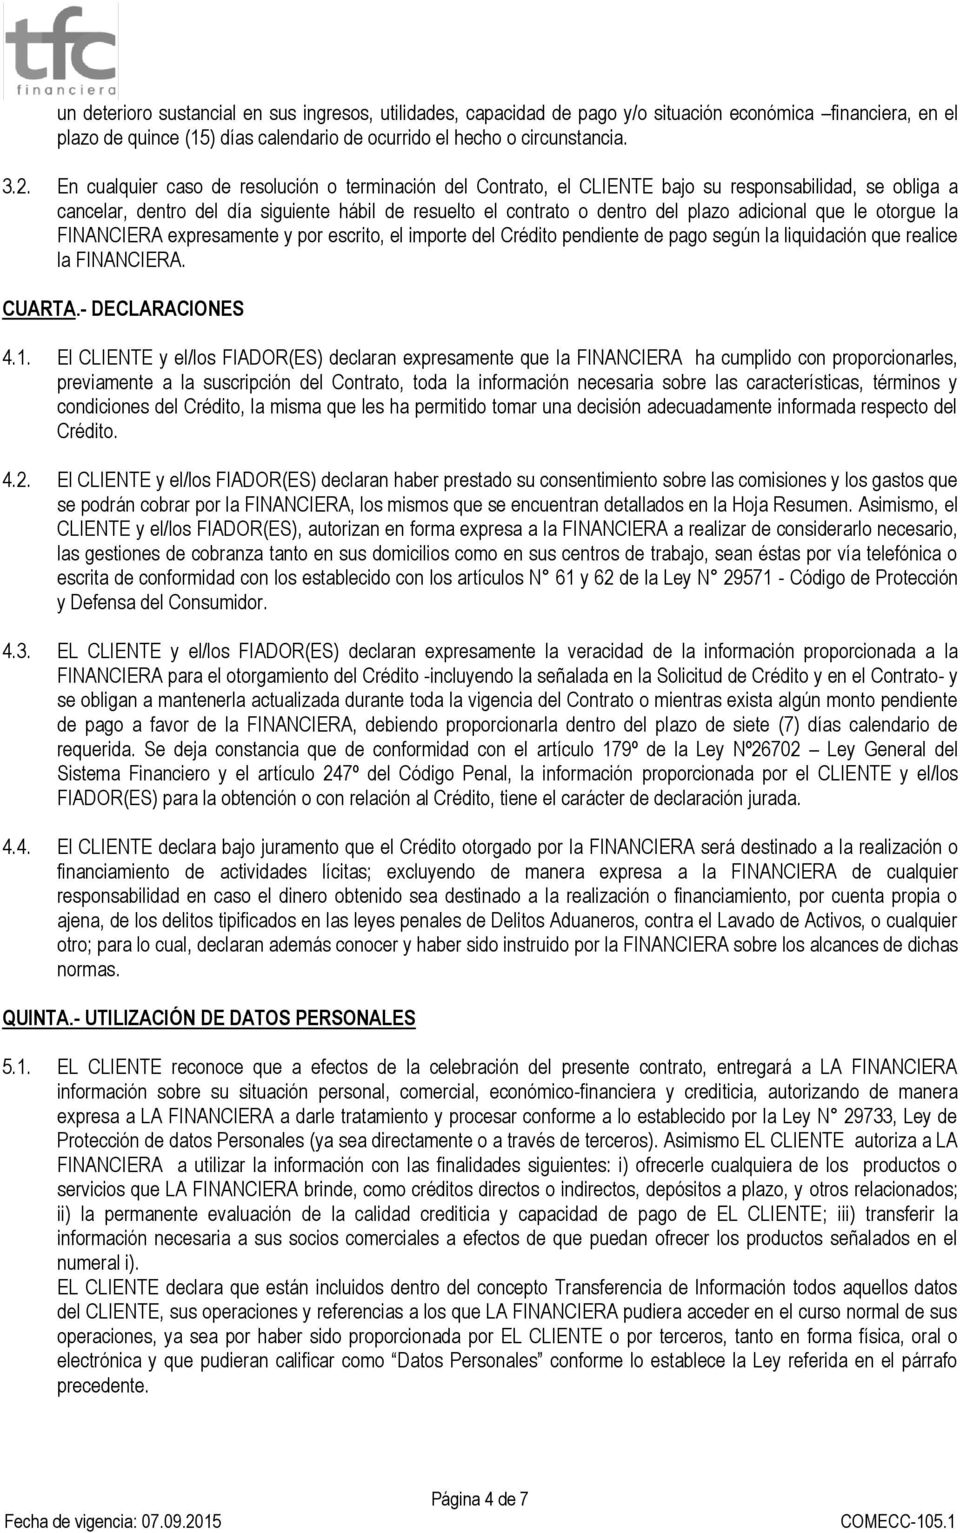 CONTRATO DE CRÉDITO COMERCIAL - PDF Descargar libre